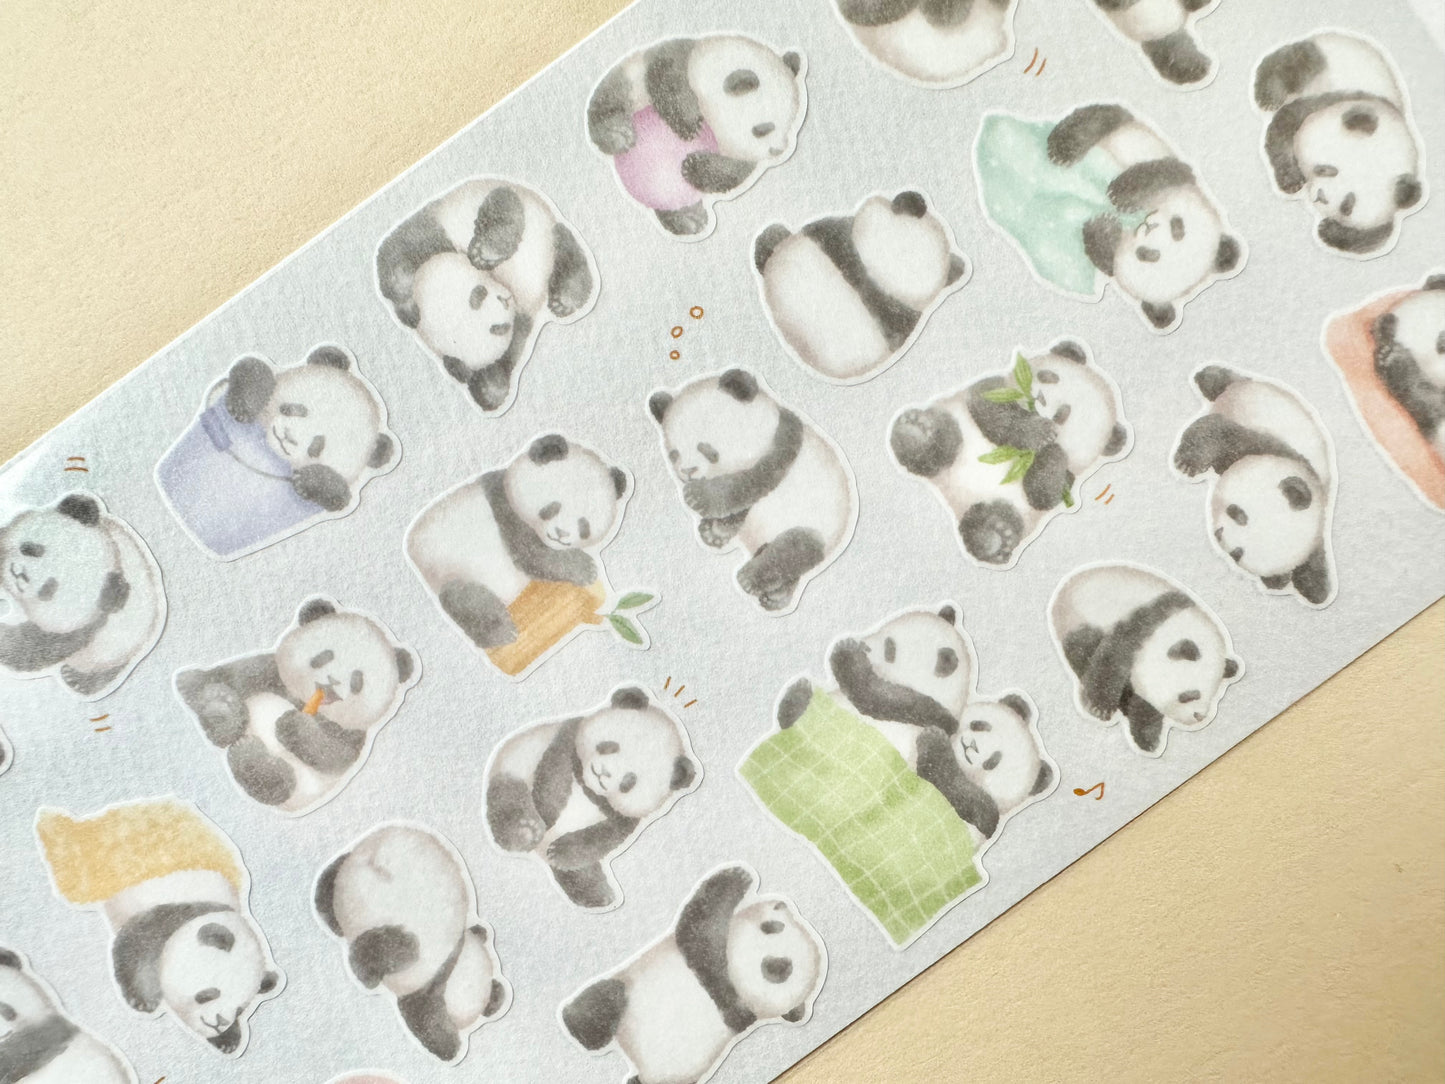 Cherish Sticker Panda